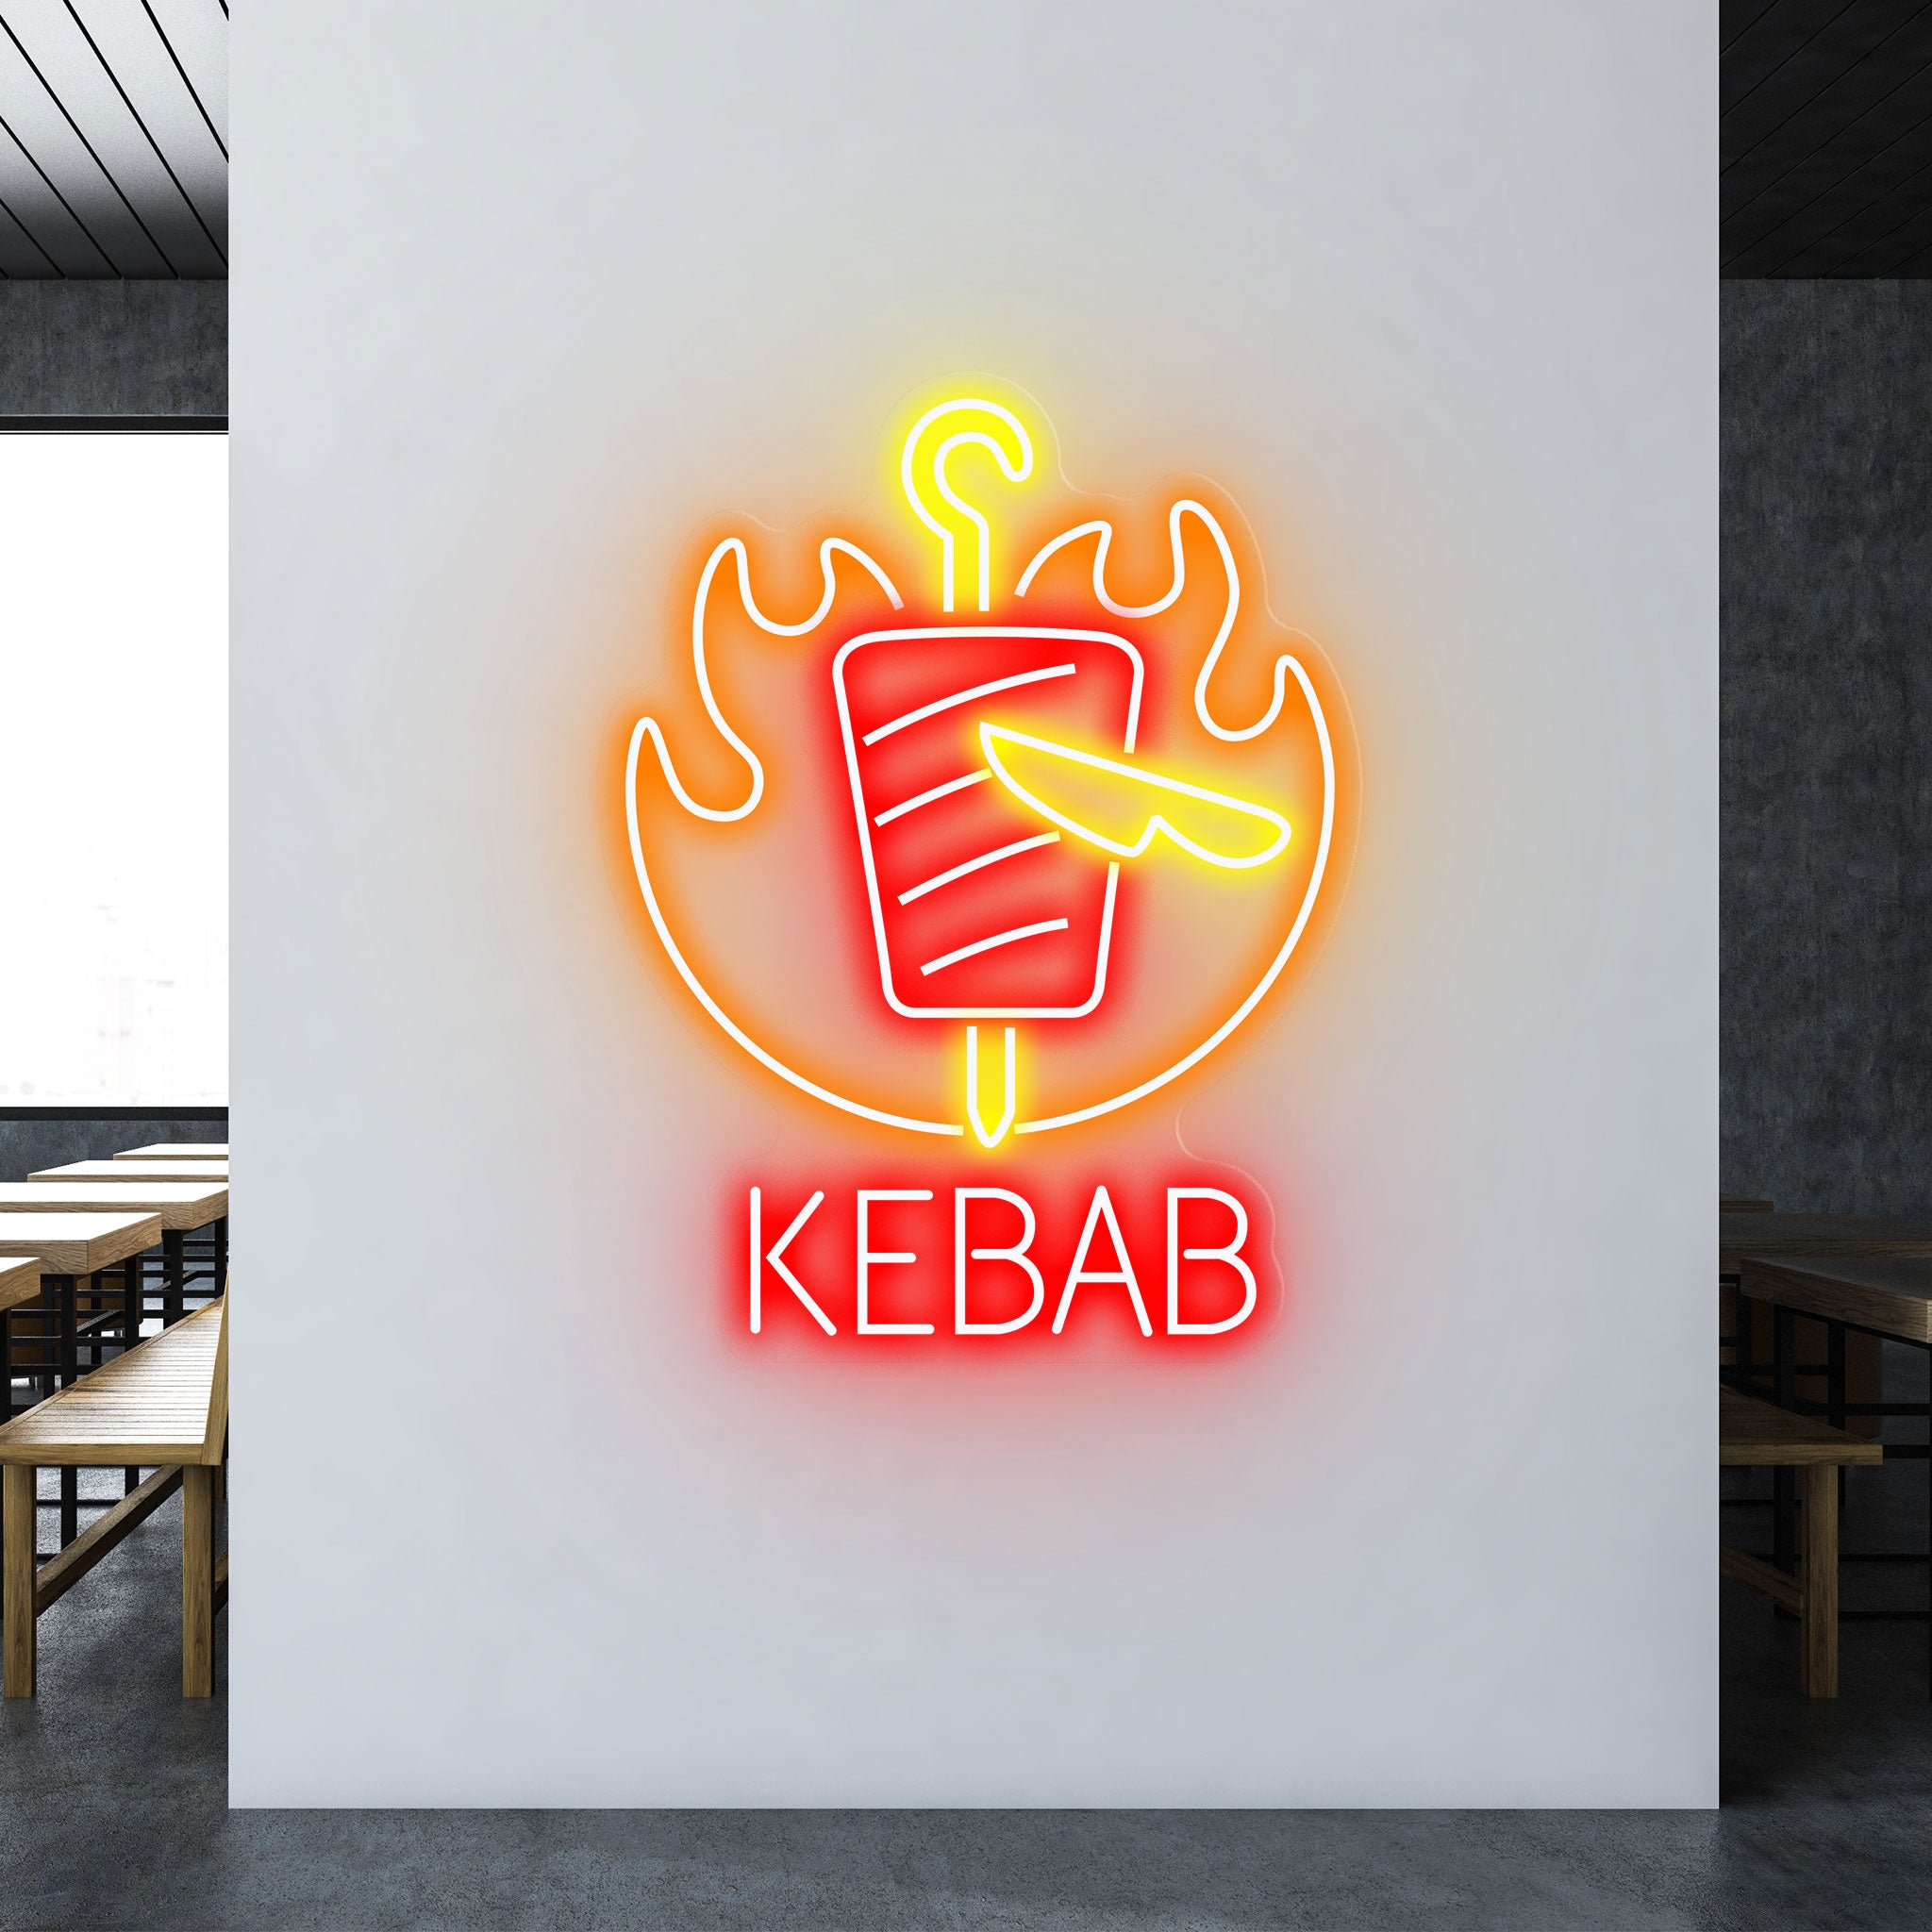 Fiery Kebab - Neon Sign - Restaurant Venue